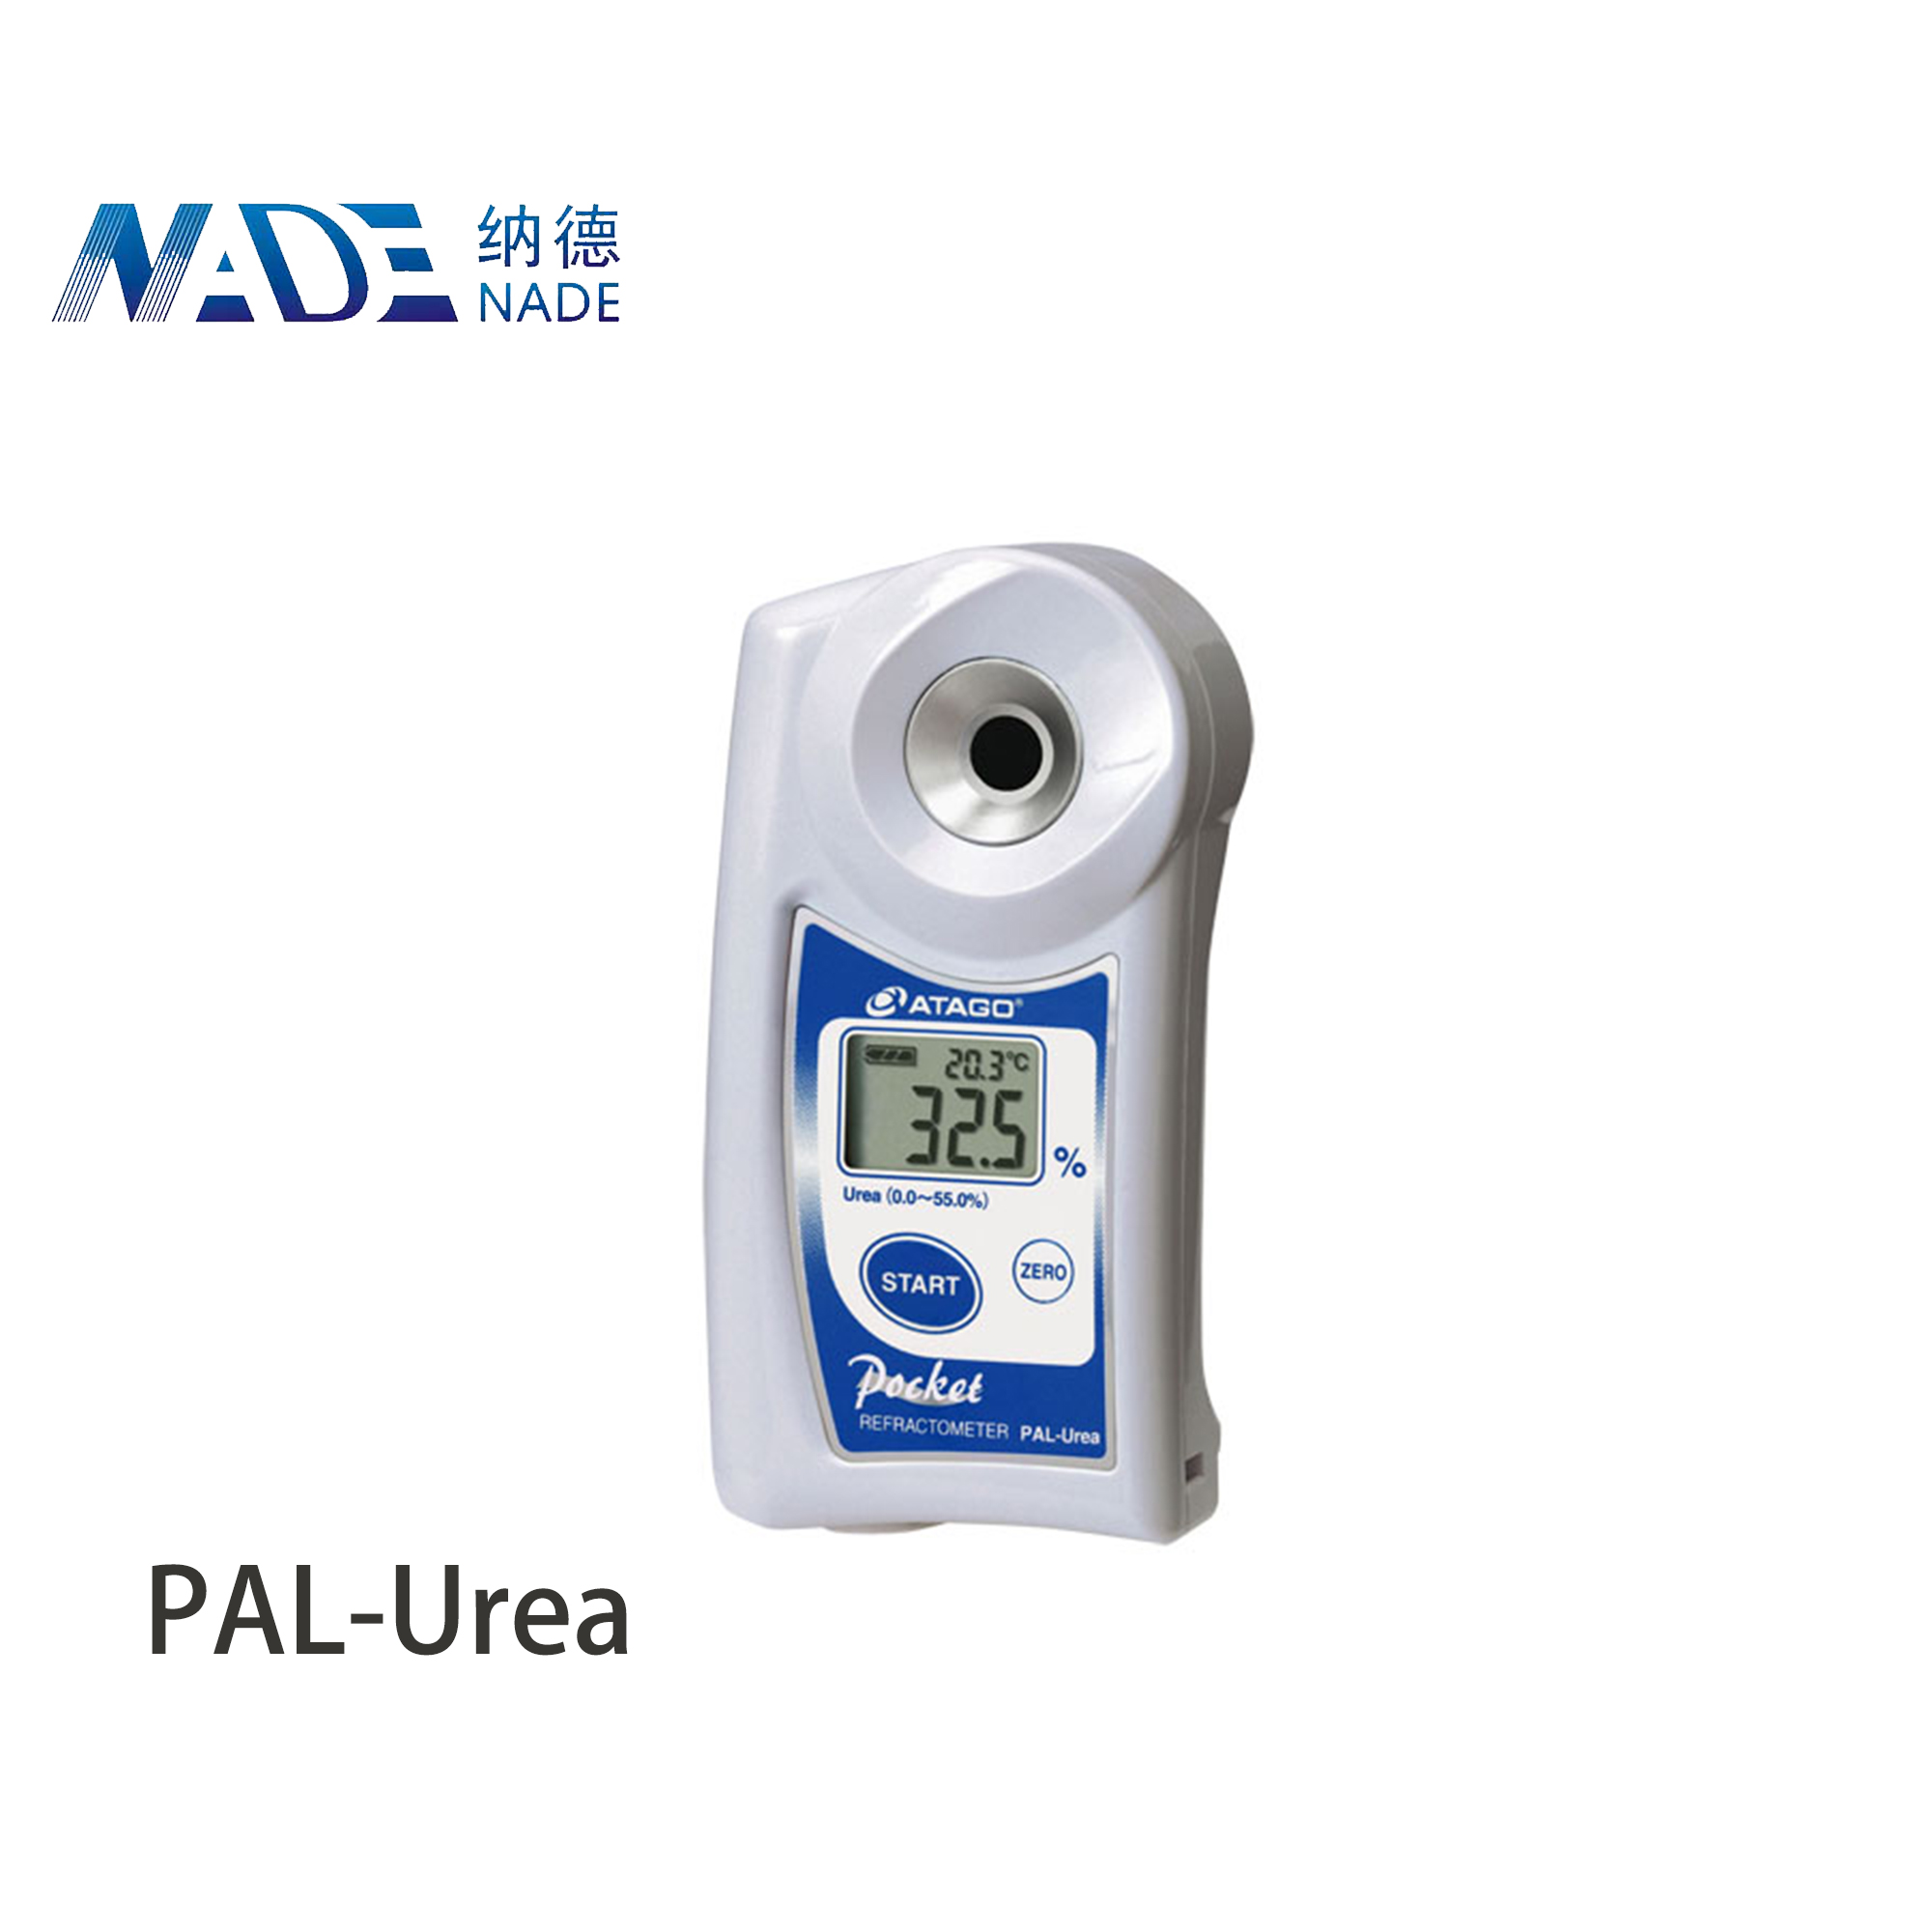 PAL-Urea Digital Atago refractometer (polarimeter) hand held "Pocket" auto refractometer 0-55% 0.3%